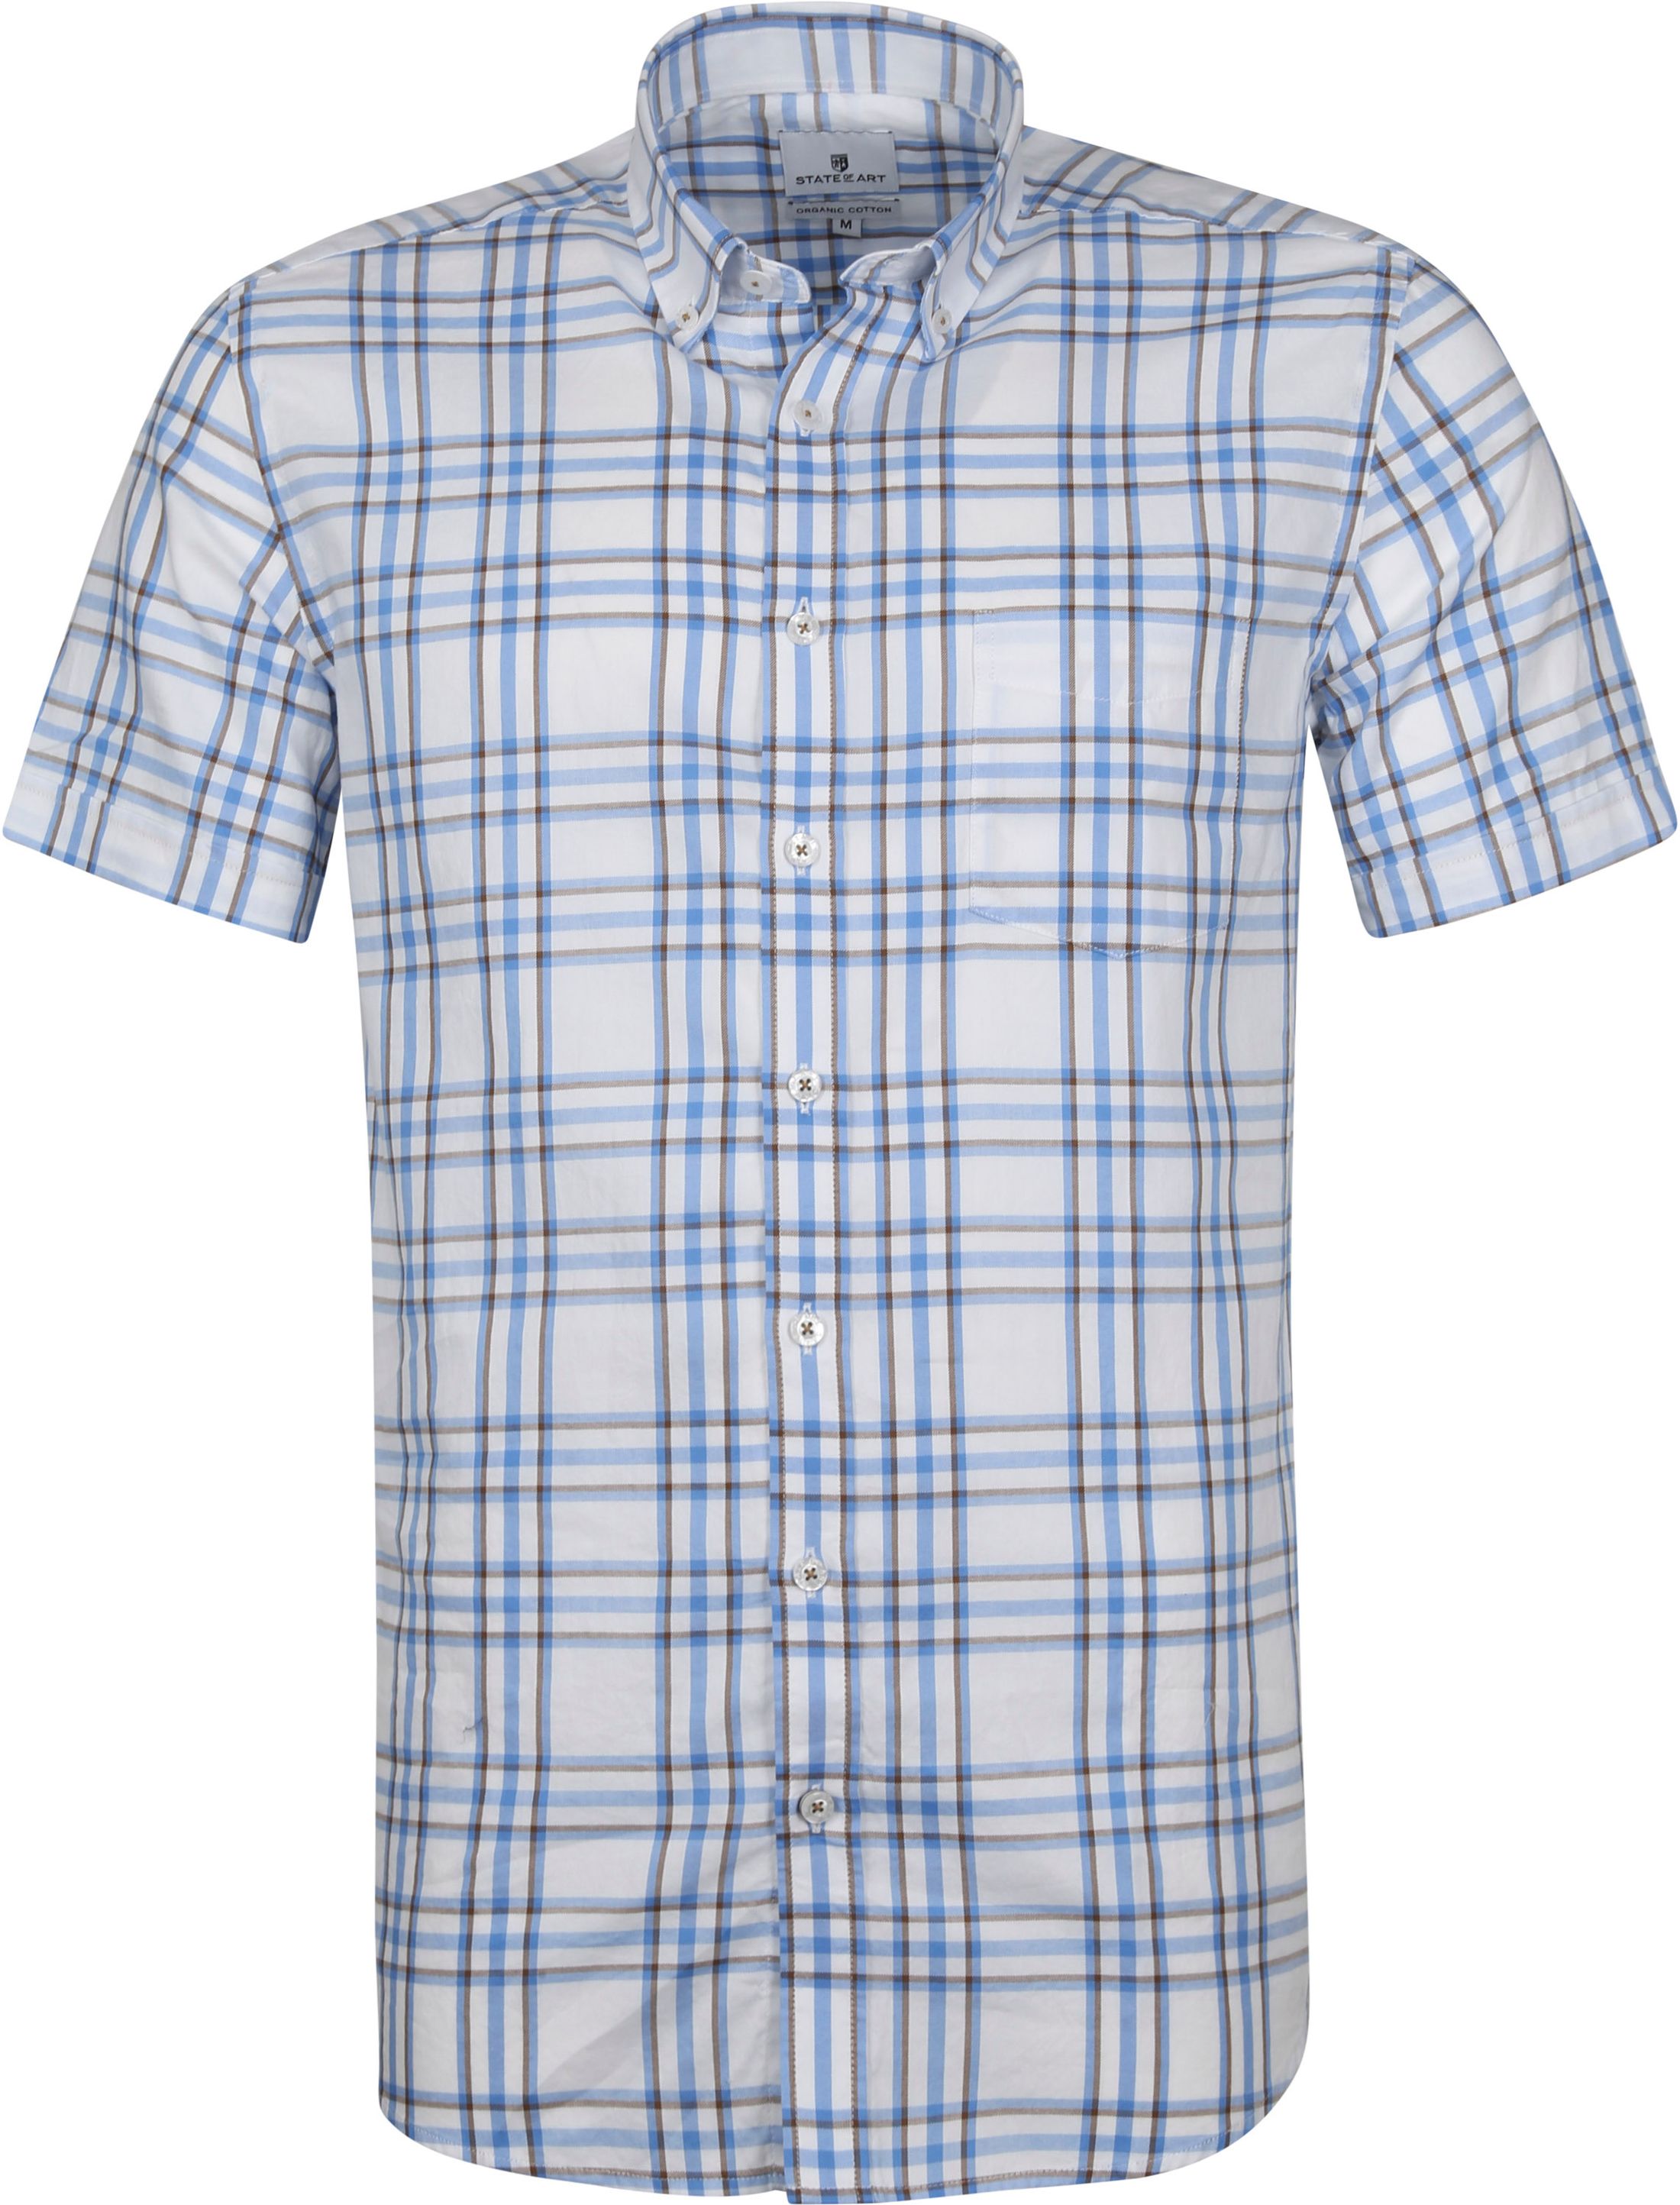 State Of Art Shortsleeve Shirt Checkered Blue size 3XL